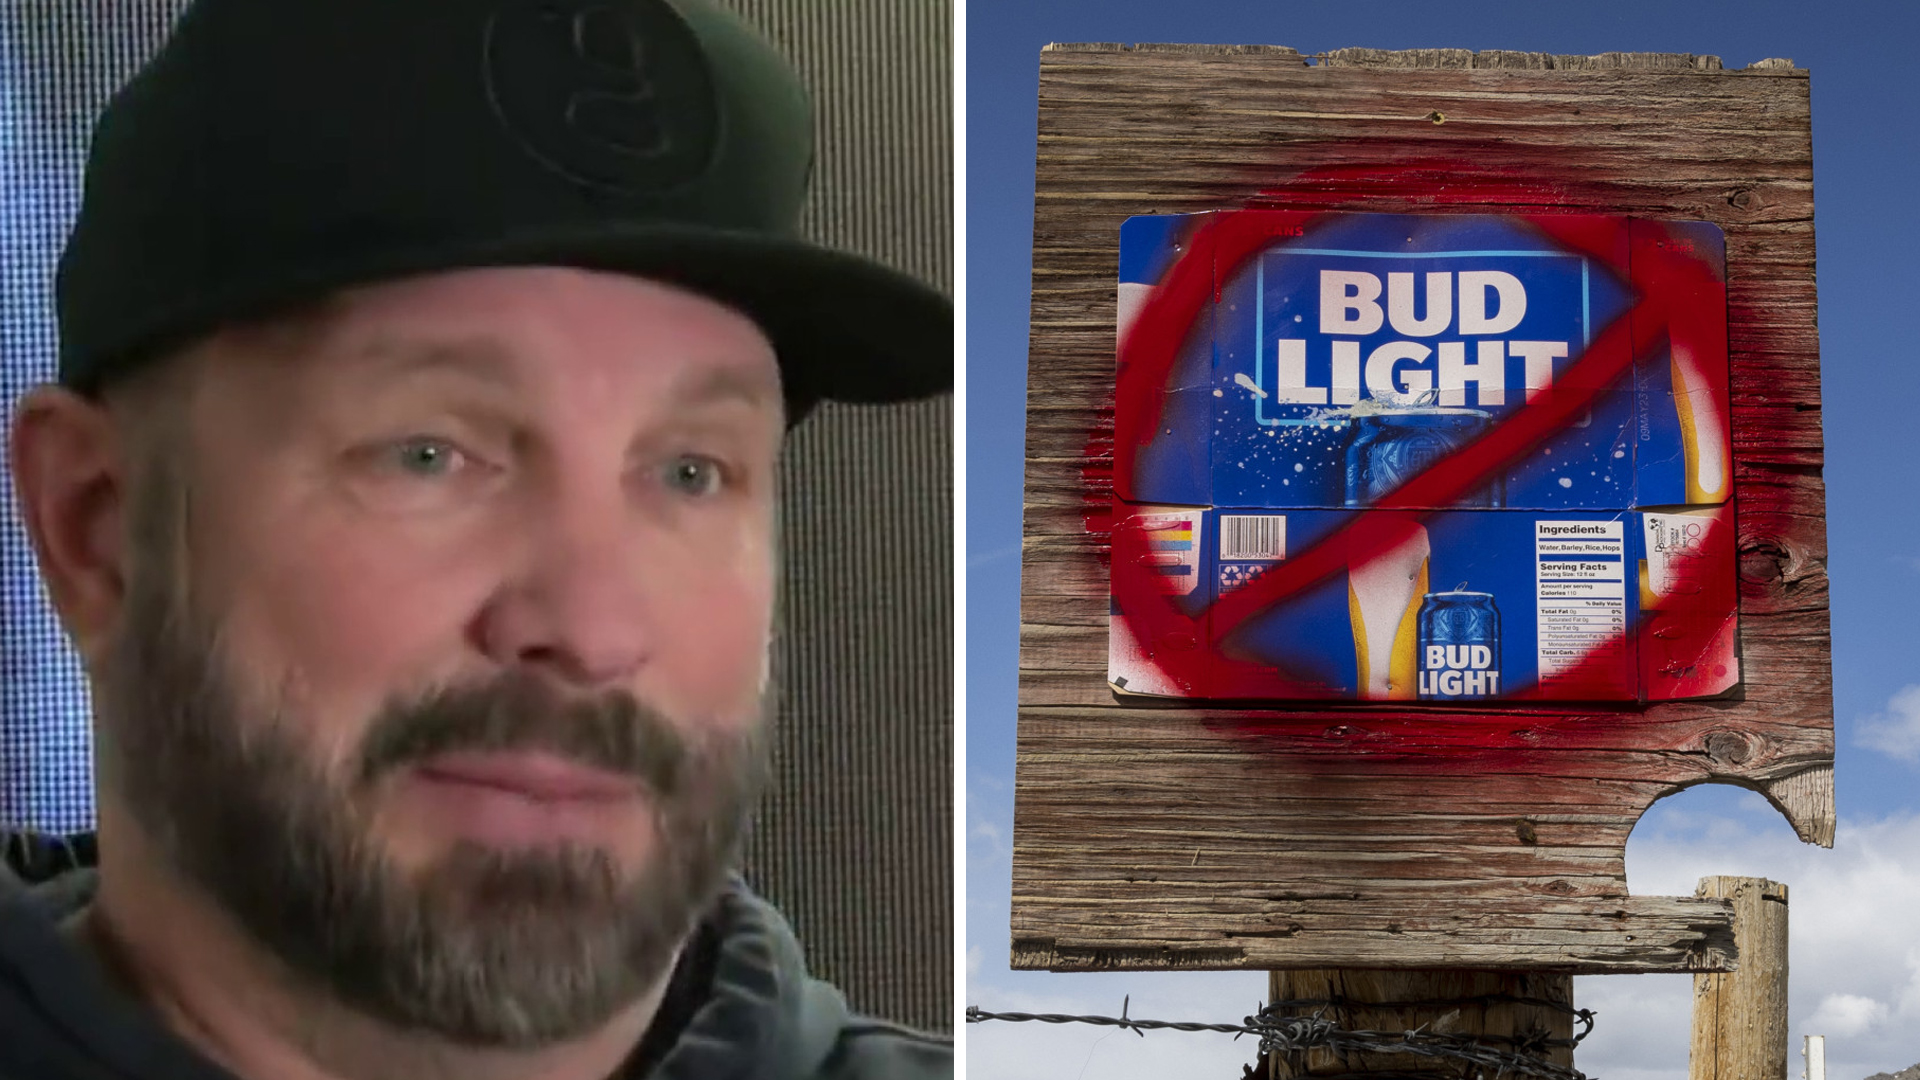 Garth And Bud Light Loss